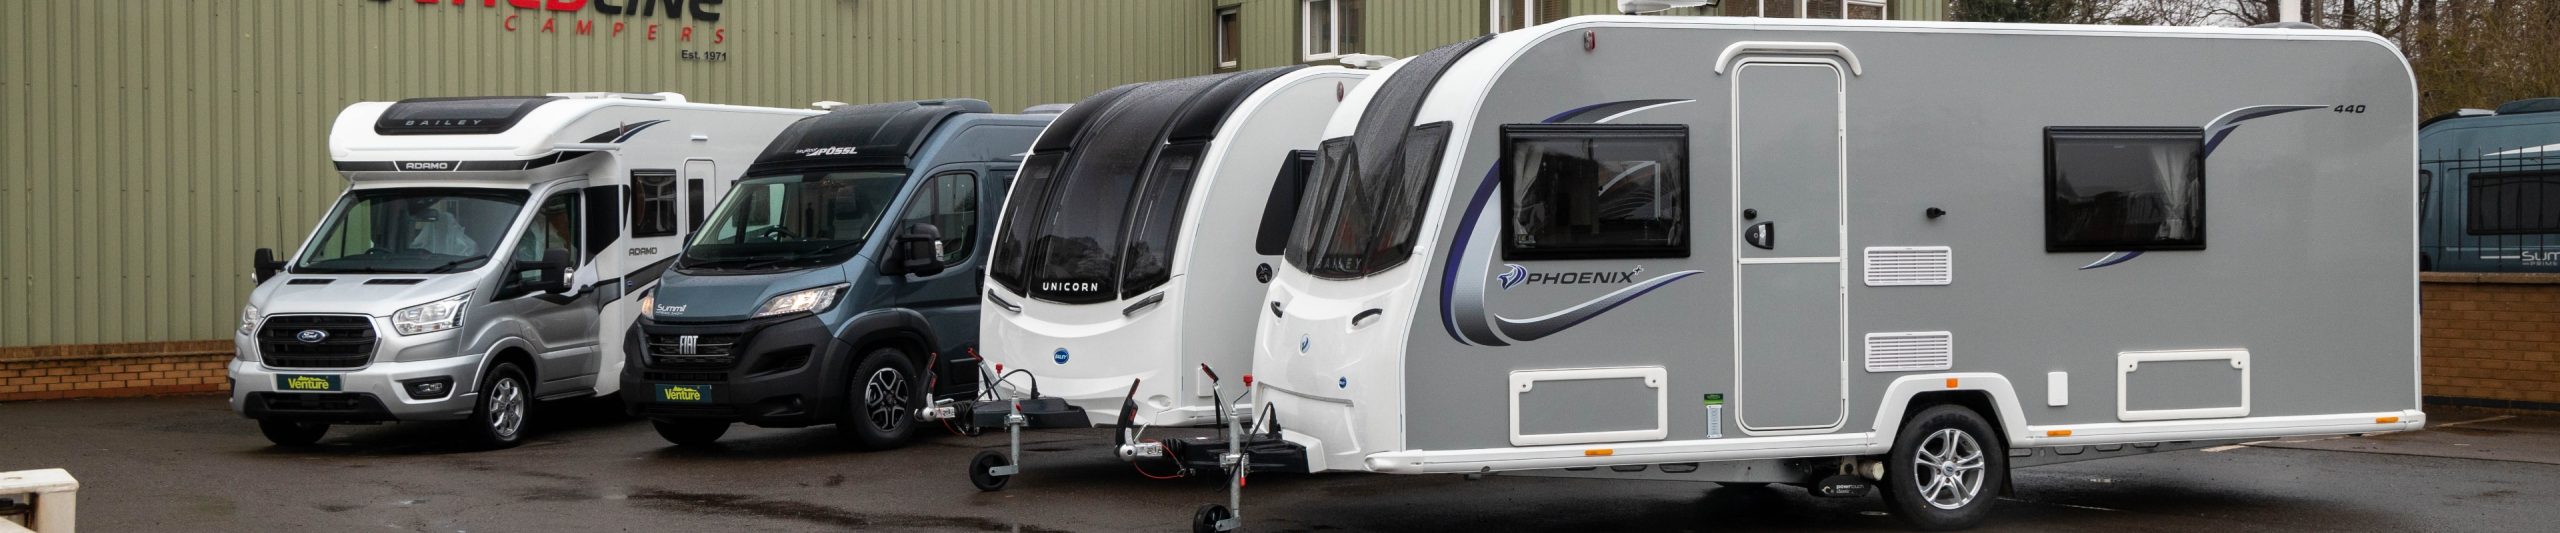 Venture Caravans Daventry